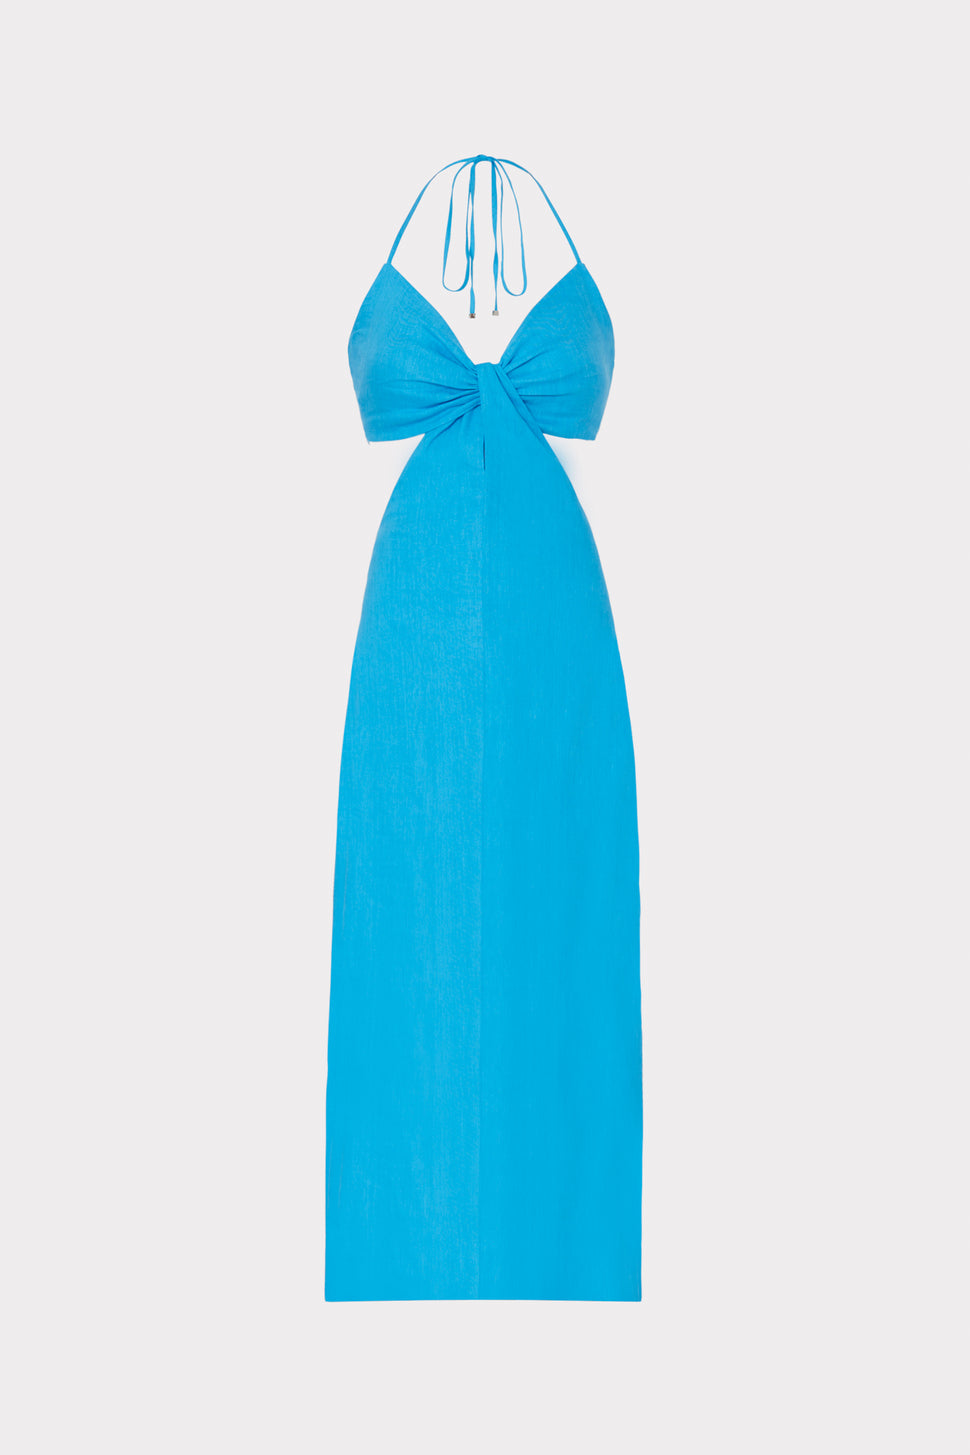 Sky Dress - Tie Dye Halter Maxi